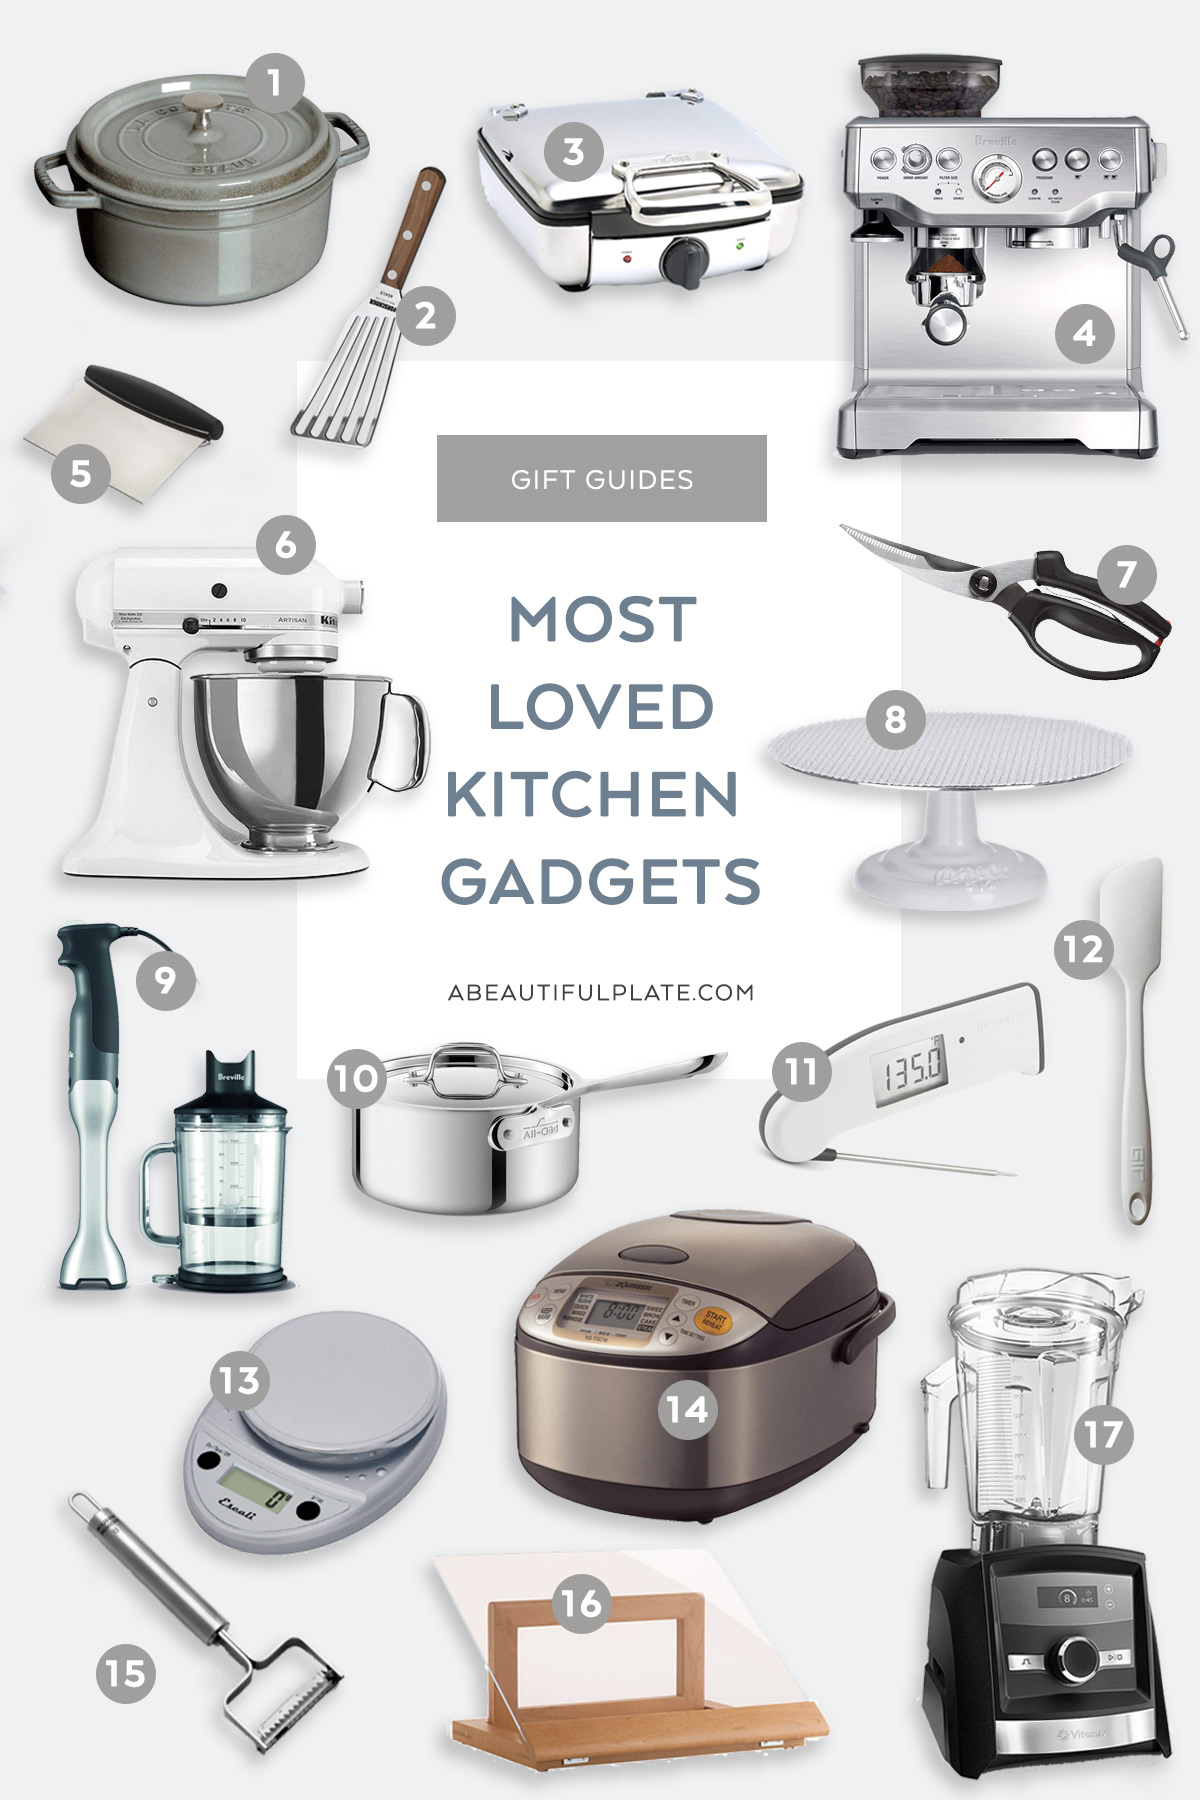 https://www.abeautifulplate.com/wp-content/uploads/2018/11/most-loved-kitchen-gadgets.jpg